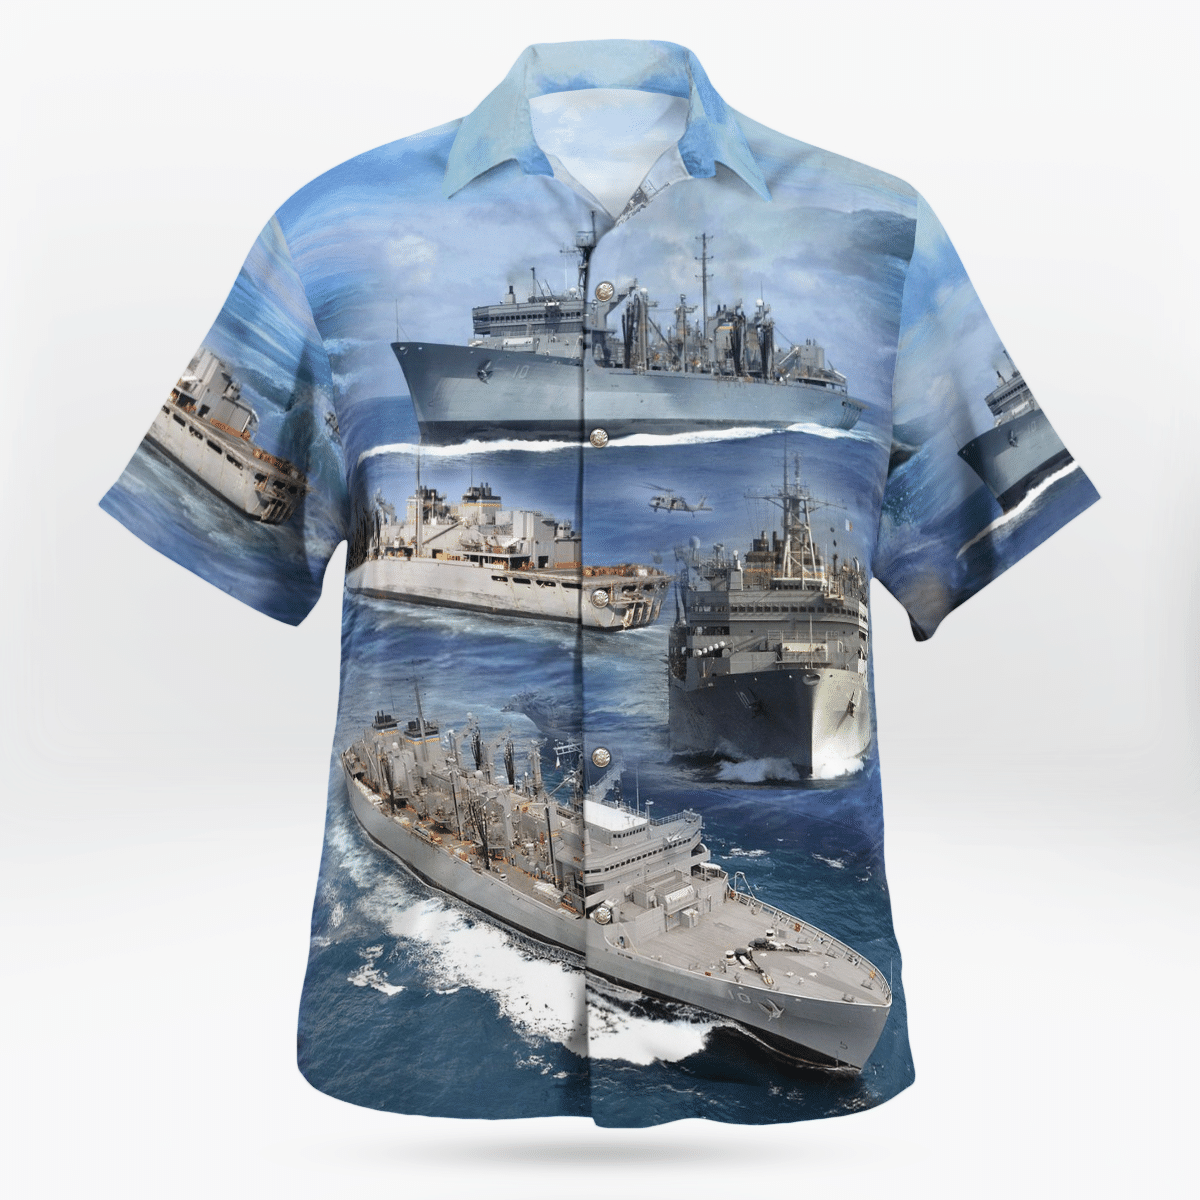 BEST US Navy USNS Bridge T-AOE-10 Hawaiian Shirt2